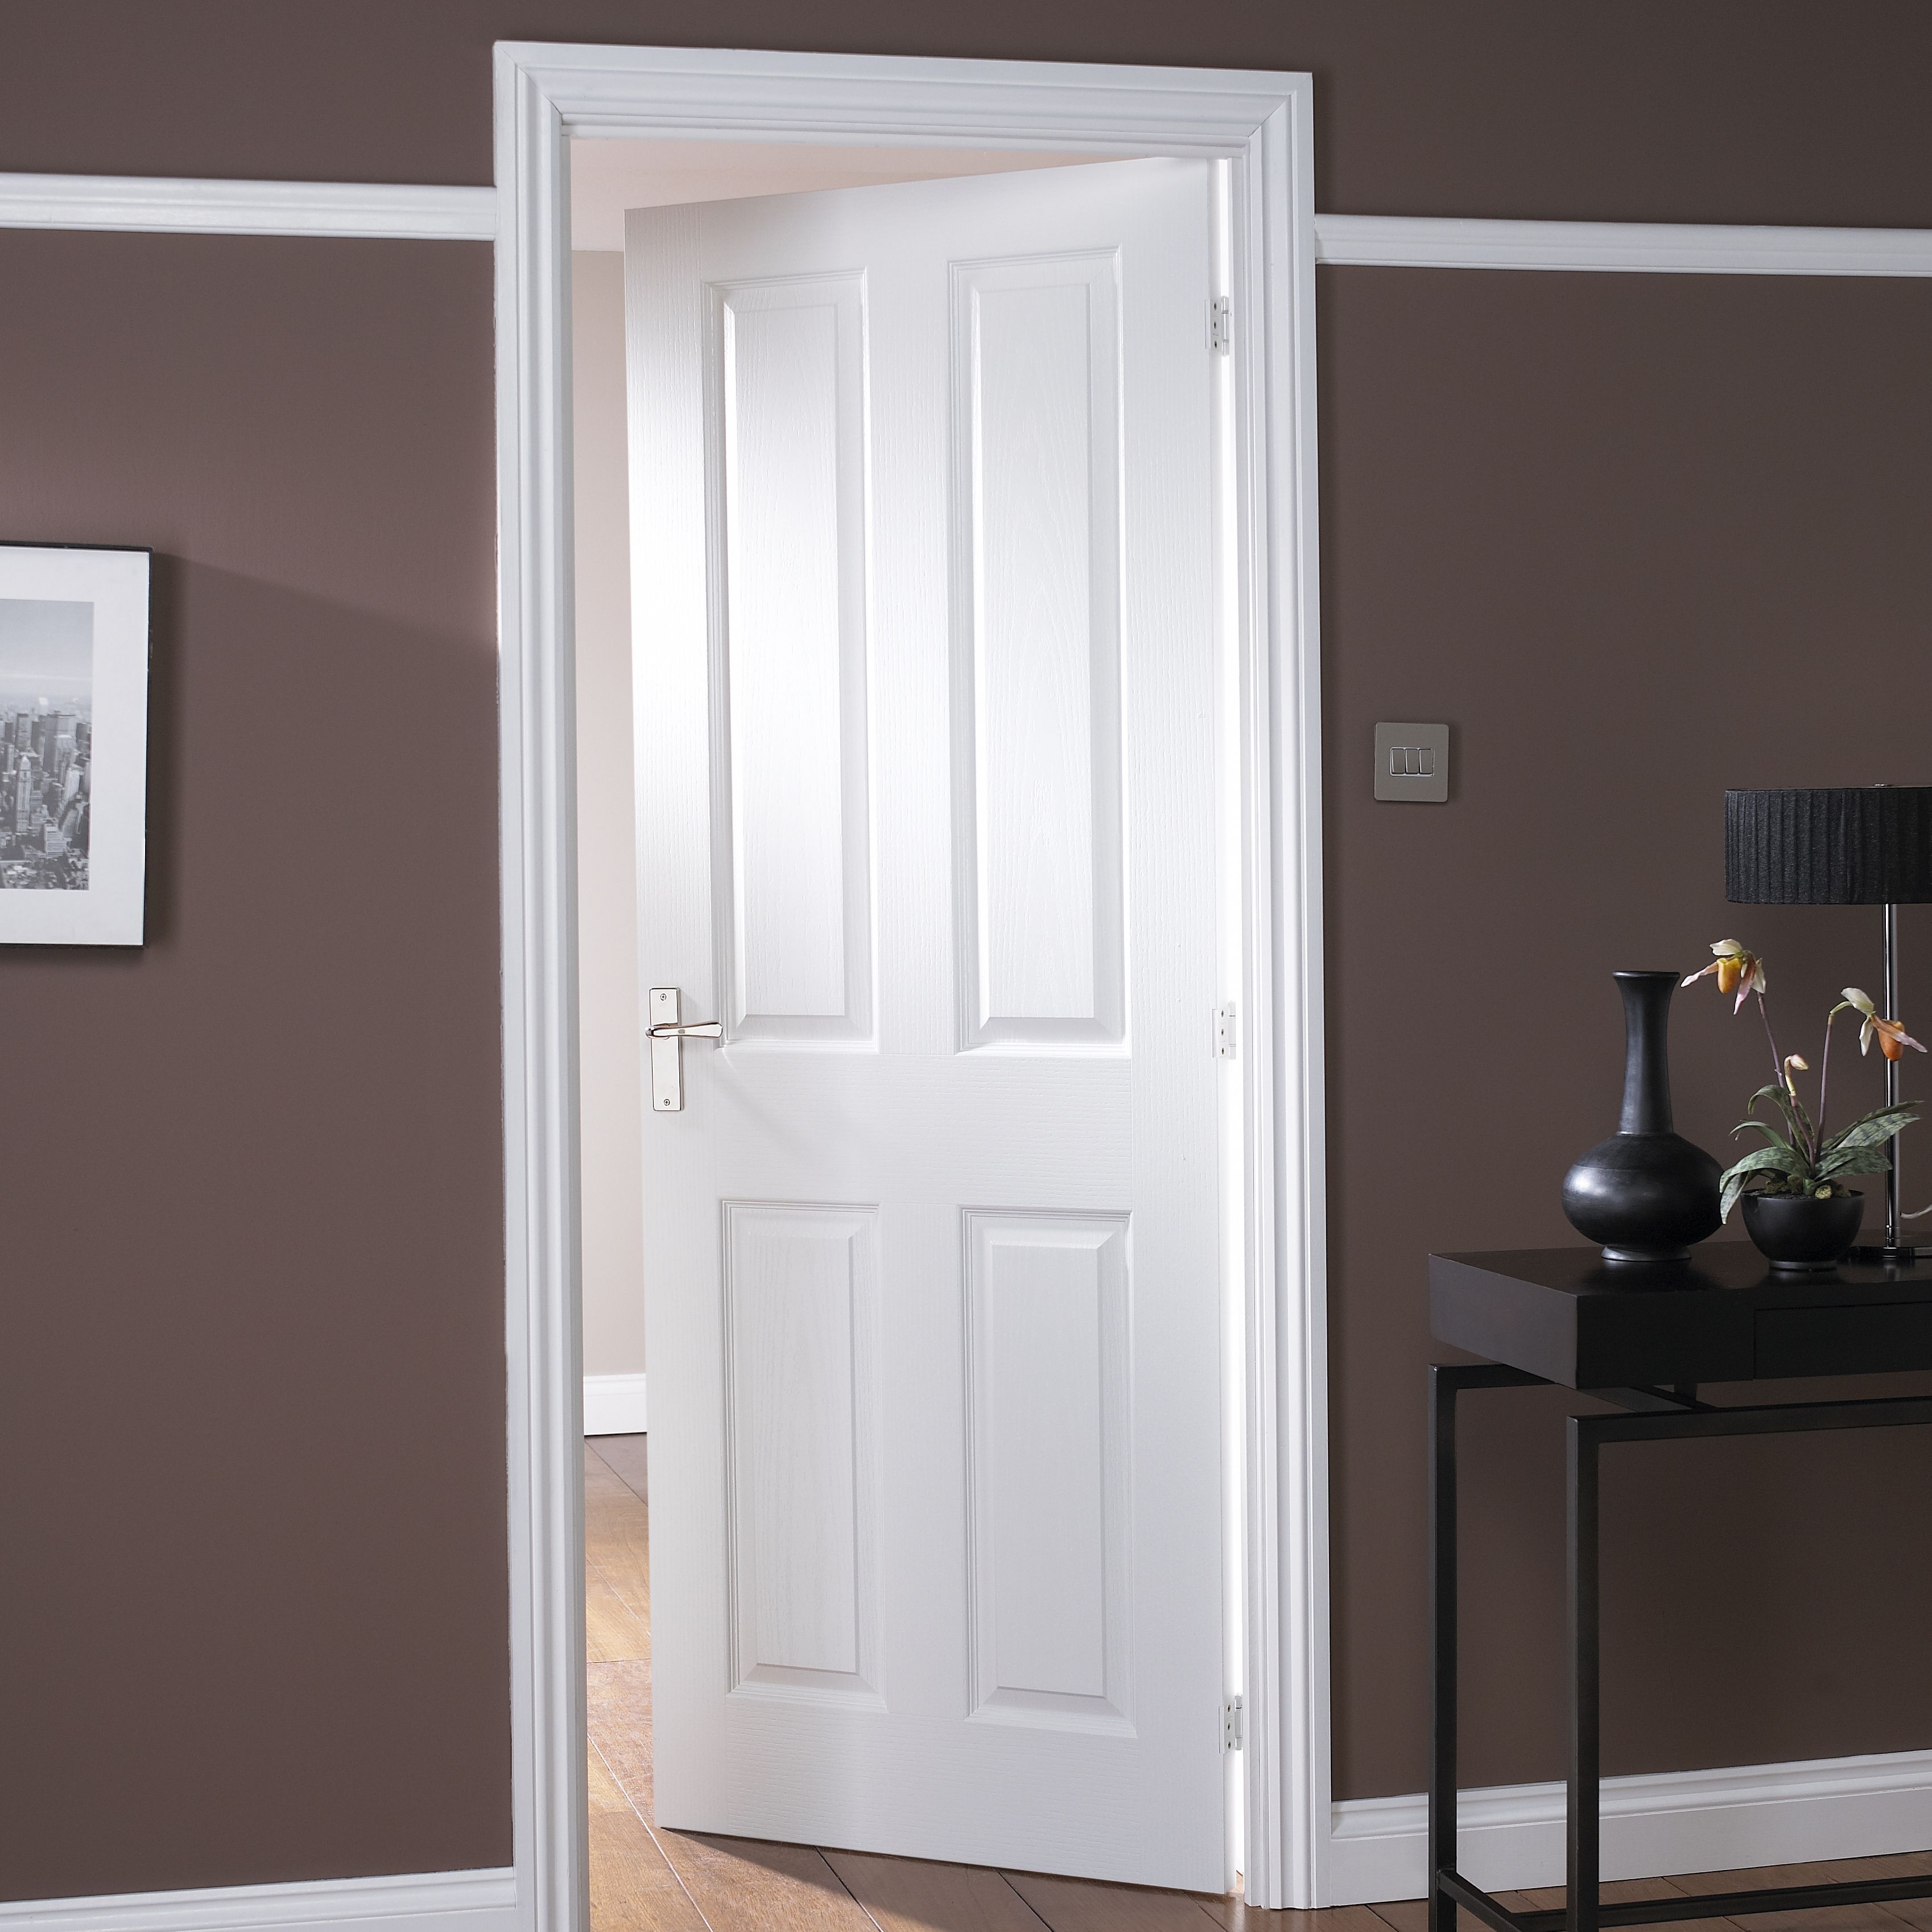 4 panel Unglazed White Internal Door, (H)2032mm (W)813mm (T)35mm